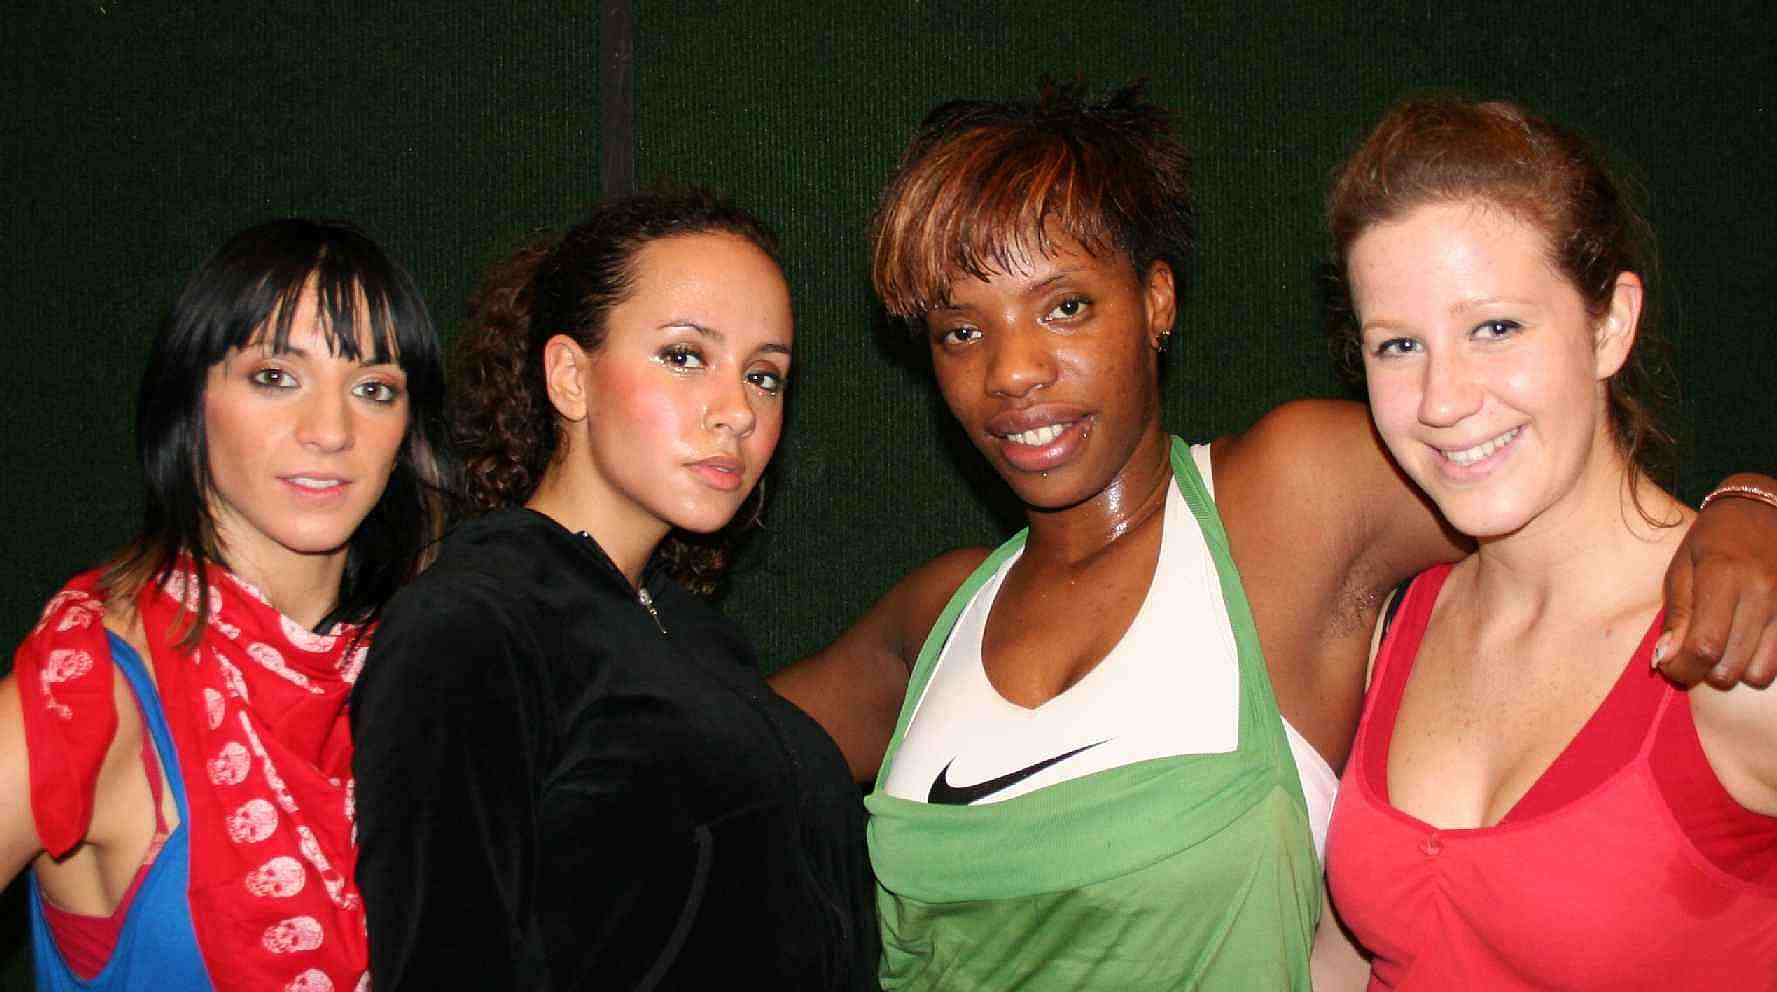 Kismet Girls dancing troupe, Husky dance studios London January 2008